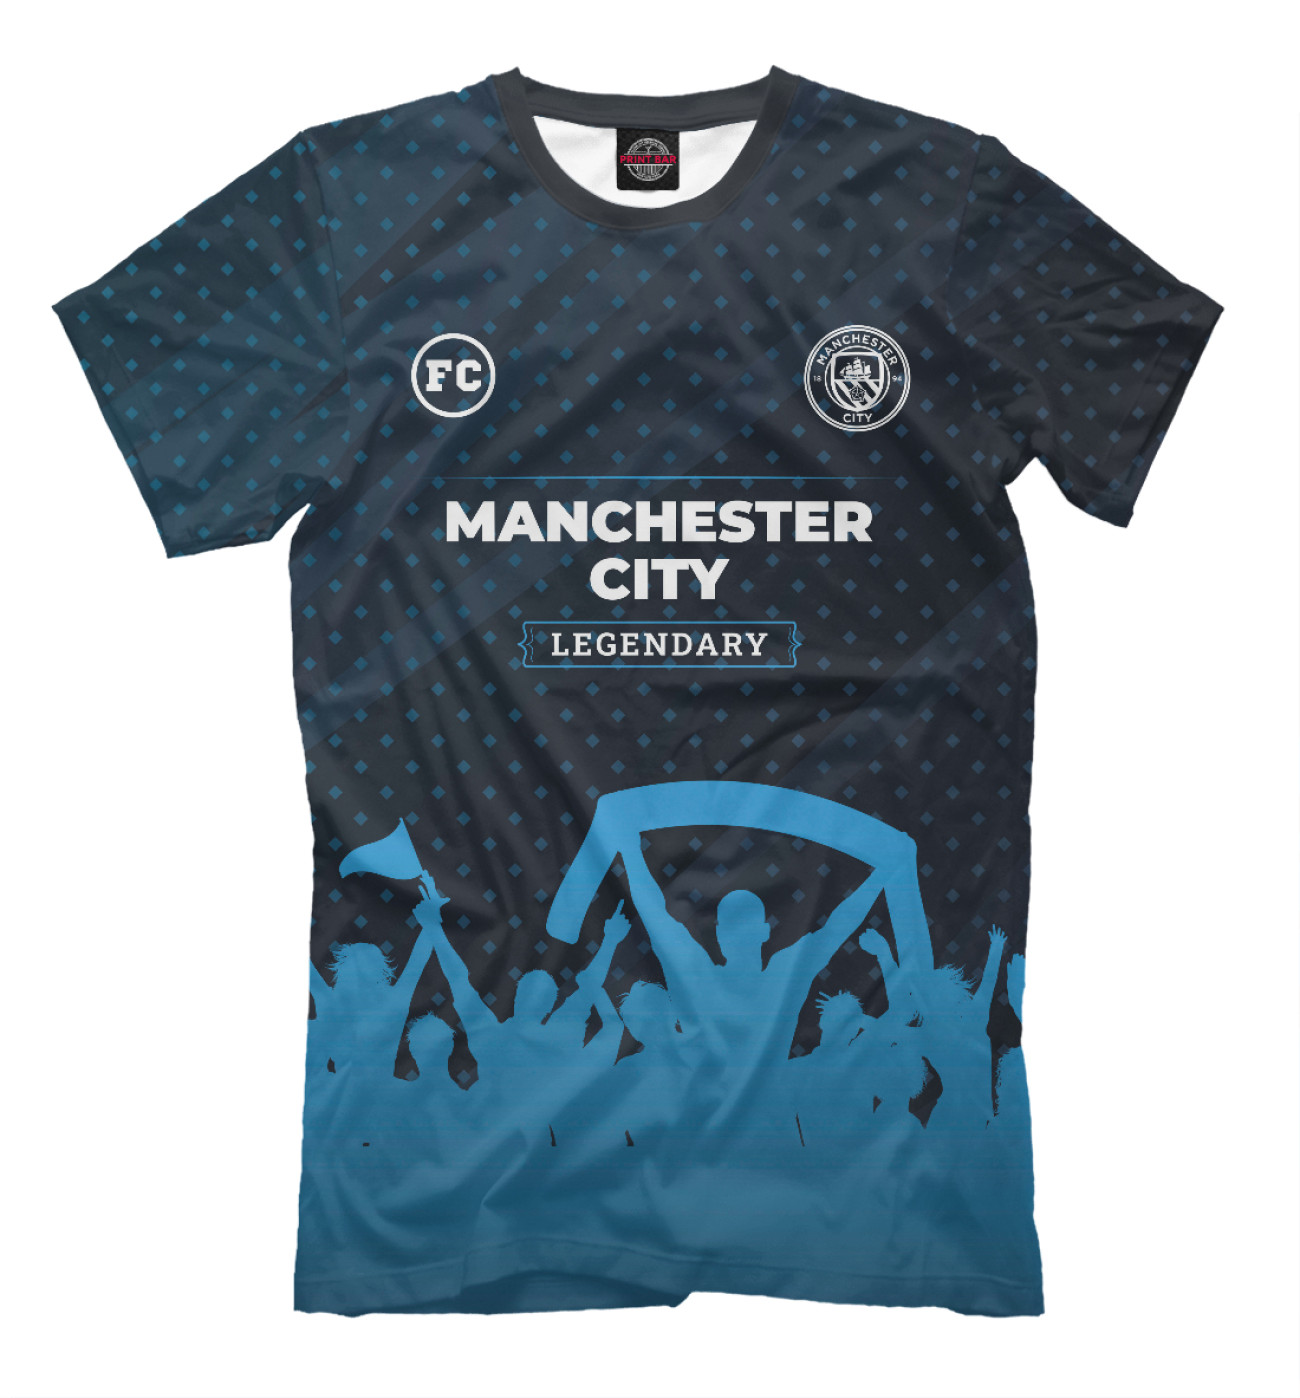 Мужская Футболка Manchester City Legendary Uniform, артикул: MNC-449304-fut-2